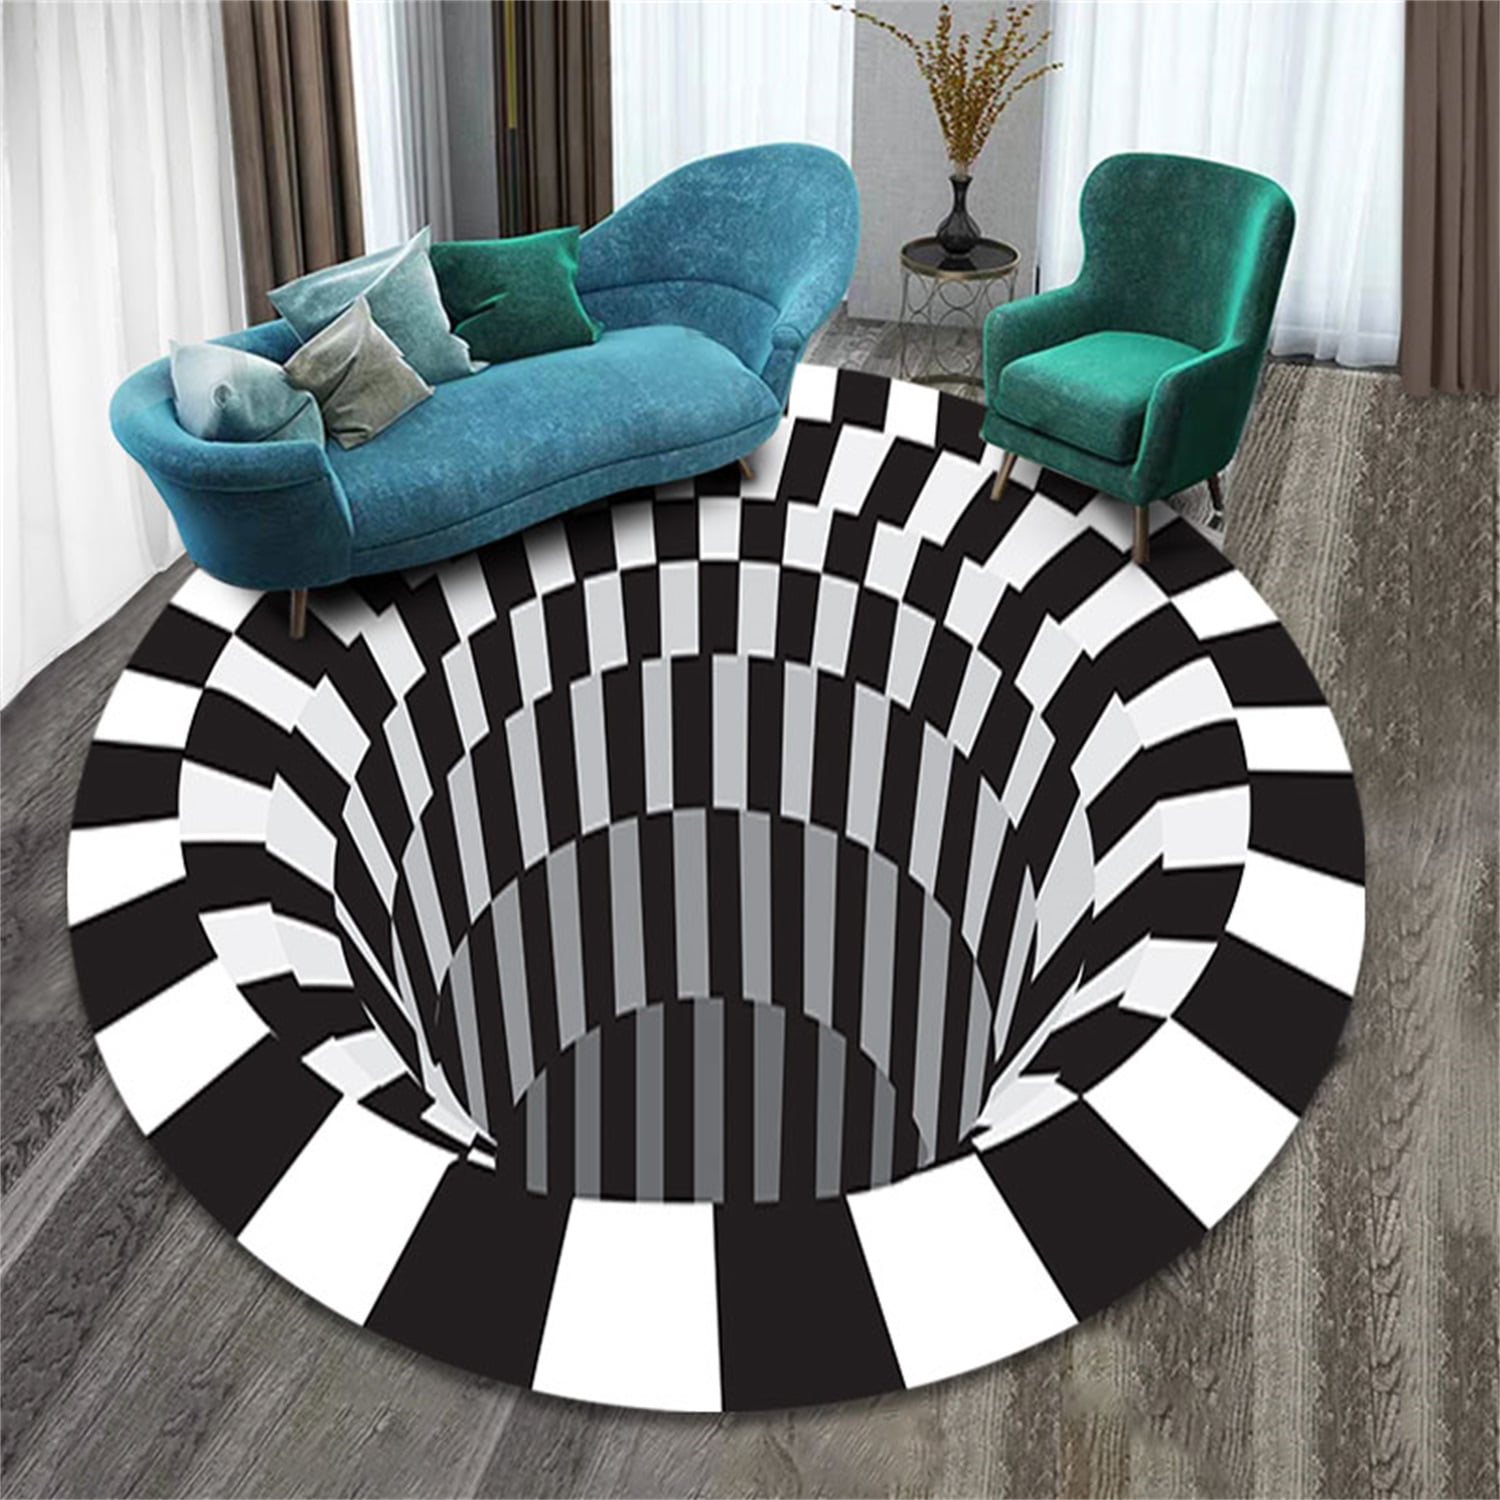 Details about   3D Printed Mat Vortex Illusion Living Room Rug Carpet Floor Home Round Mats L4U6 